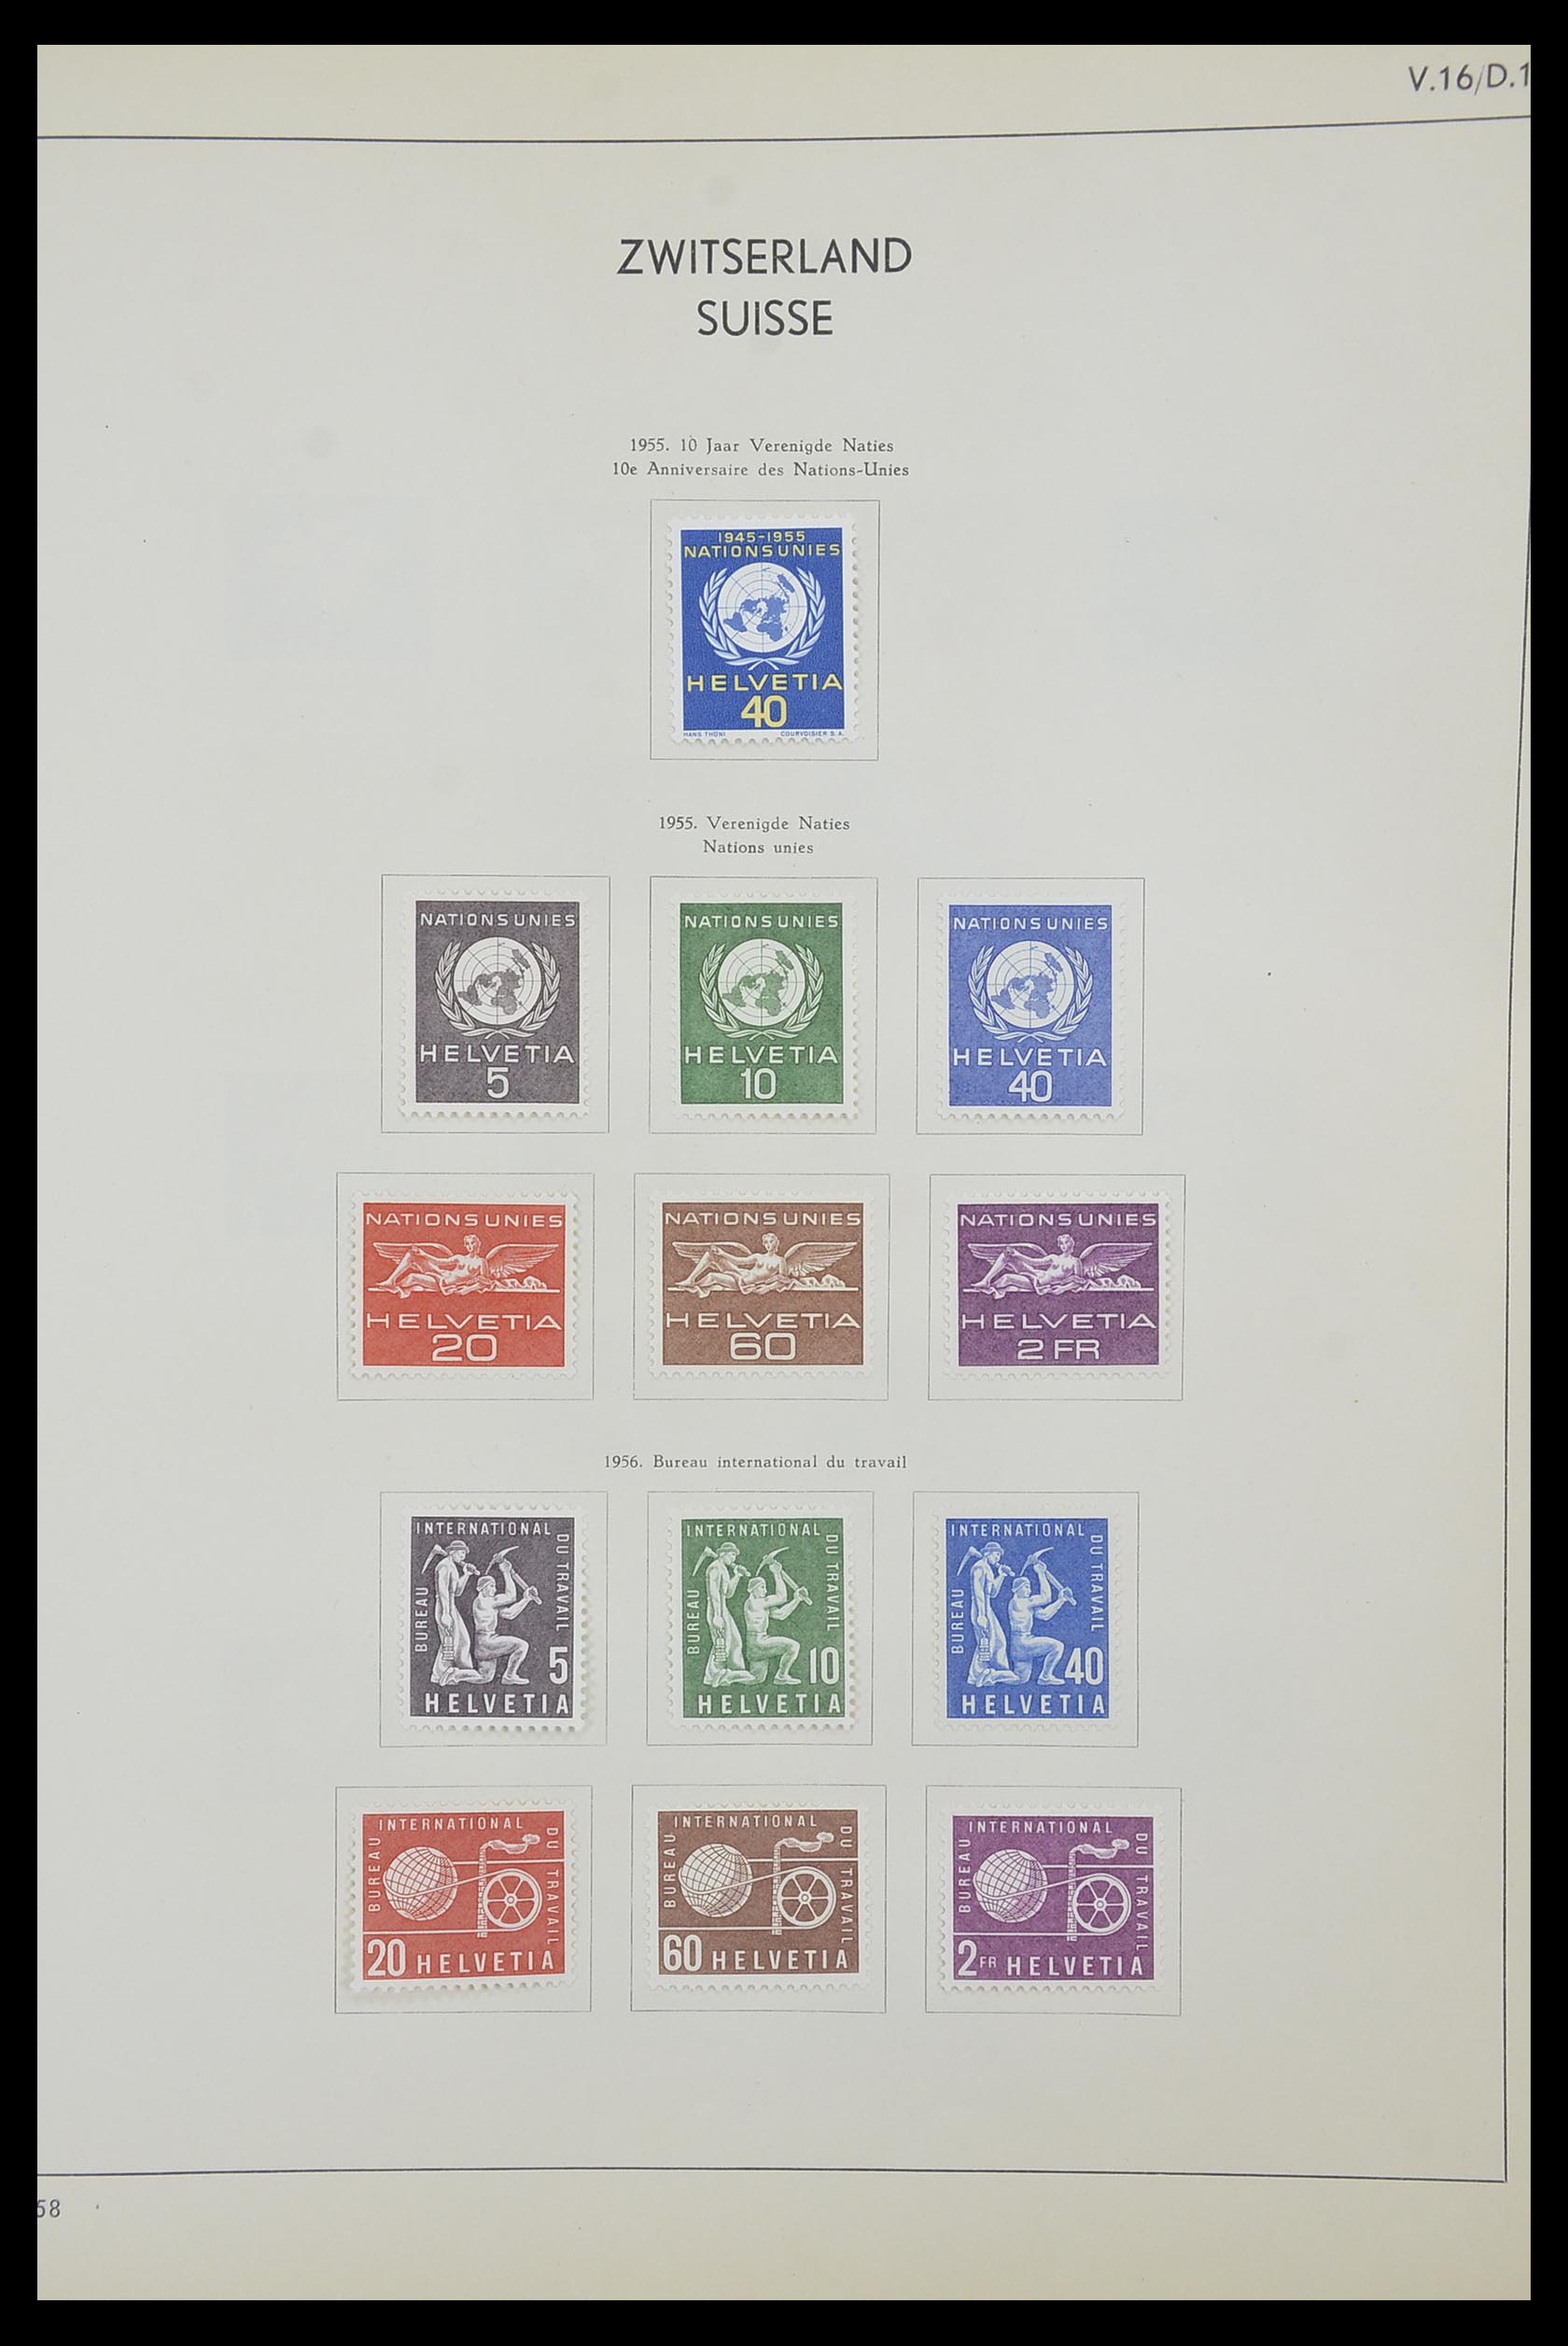 33601 116 - Stamp collection 33601 Switzerland 1854-1985.